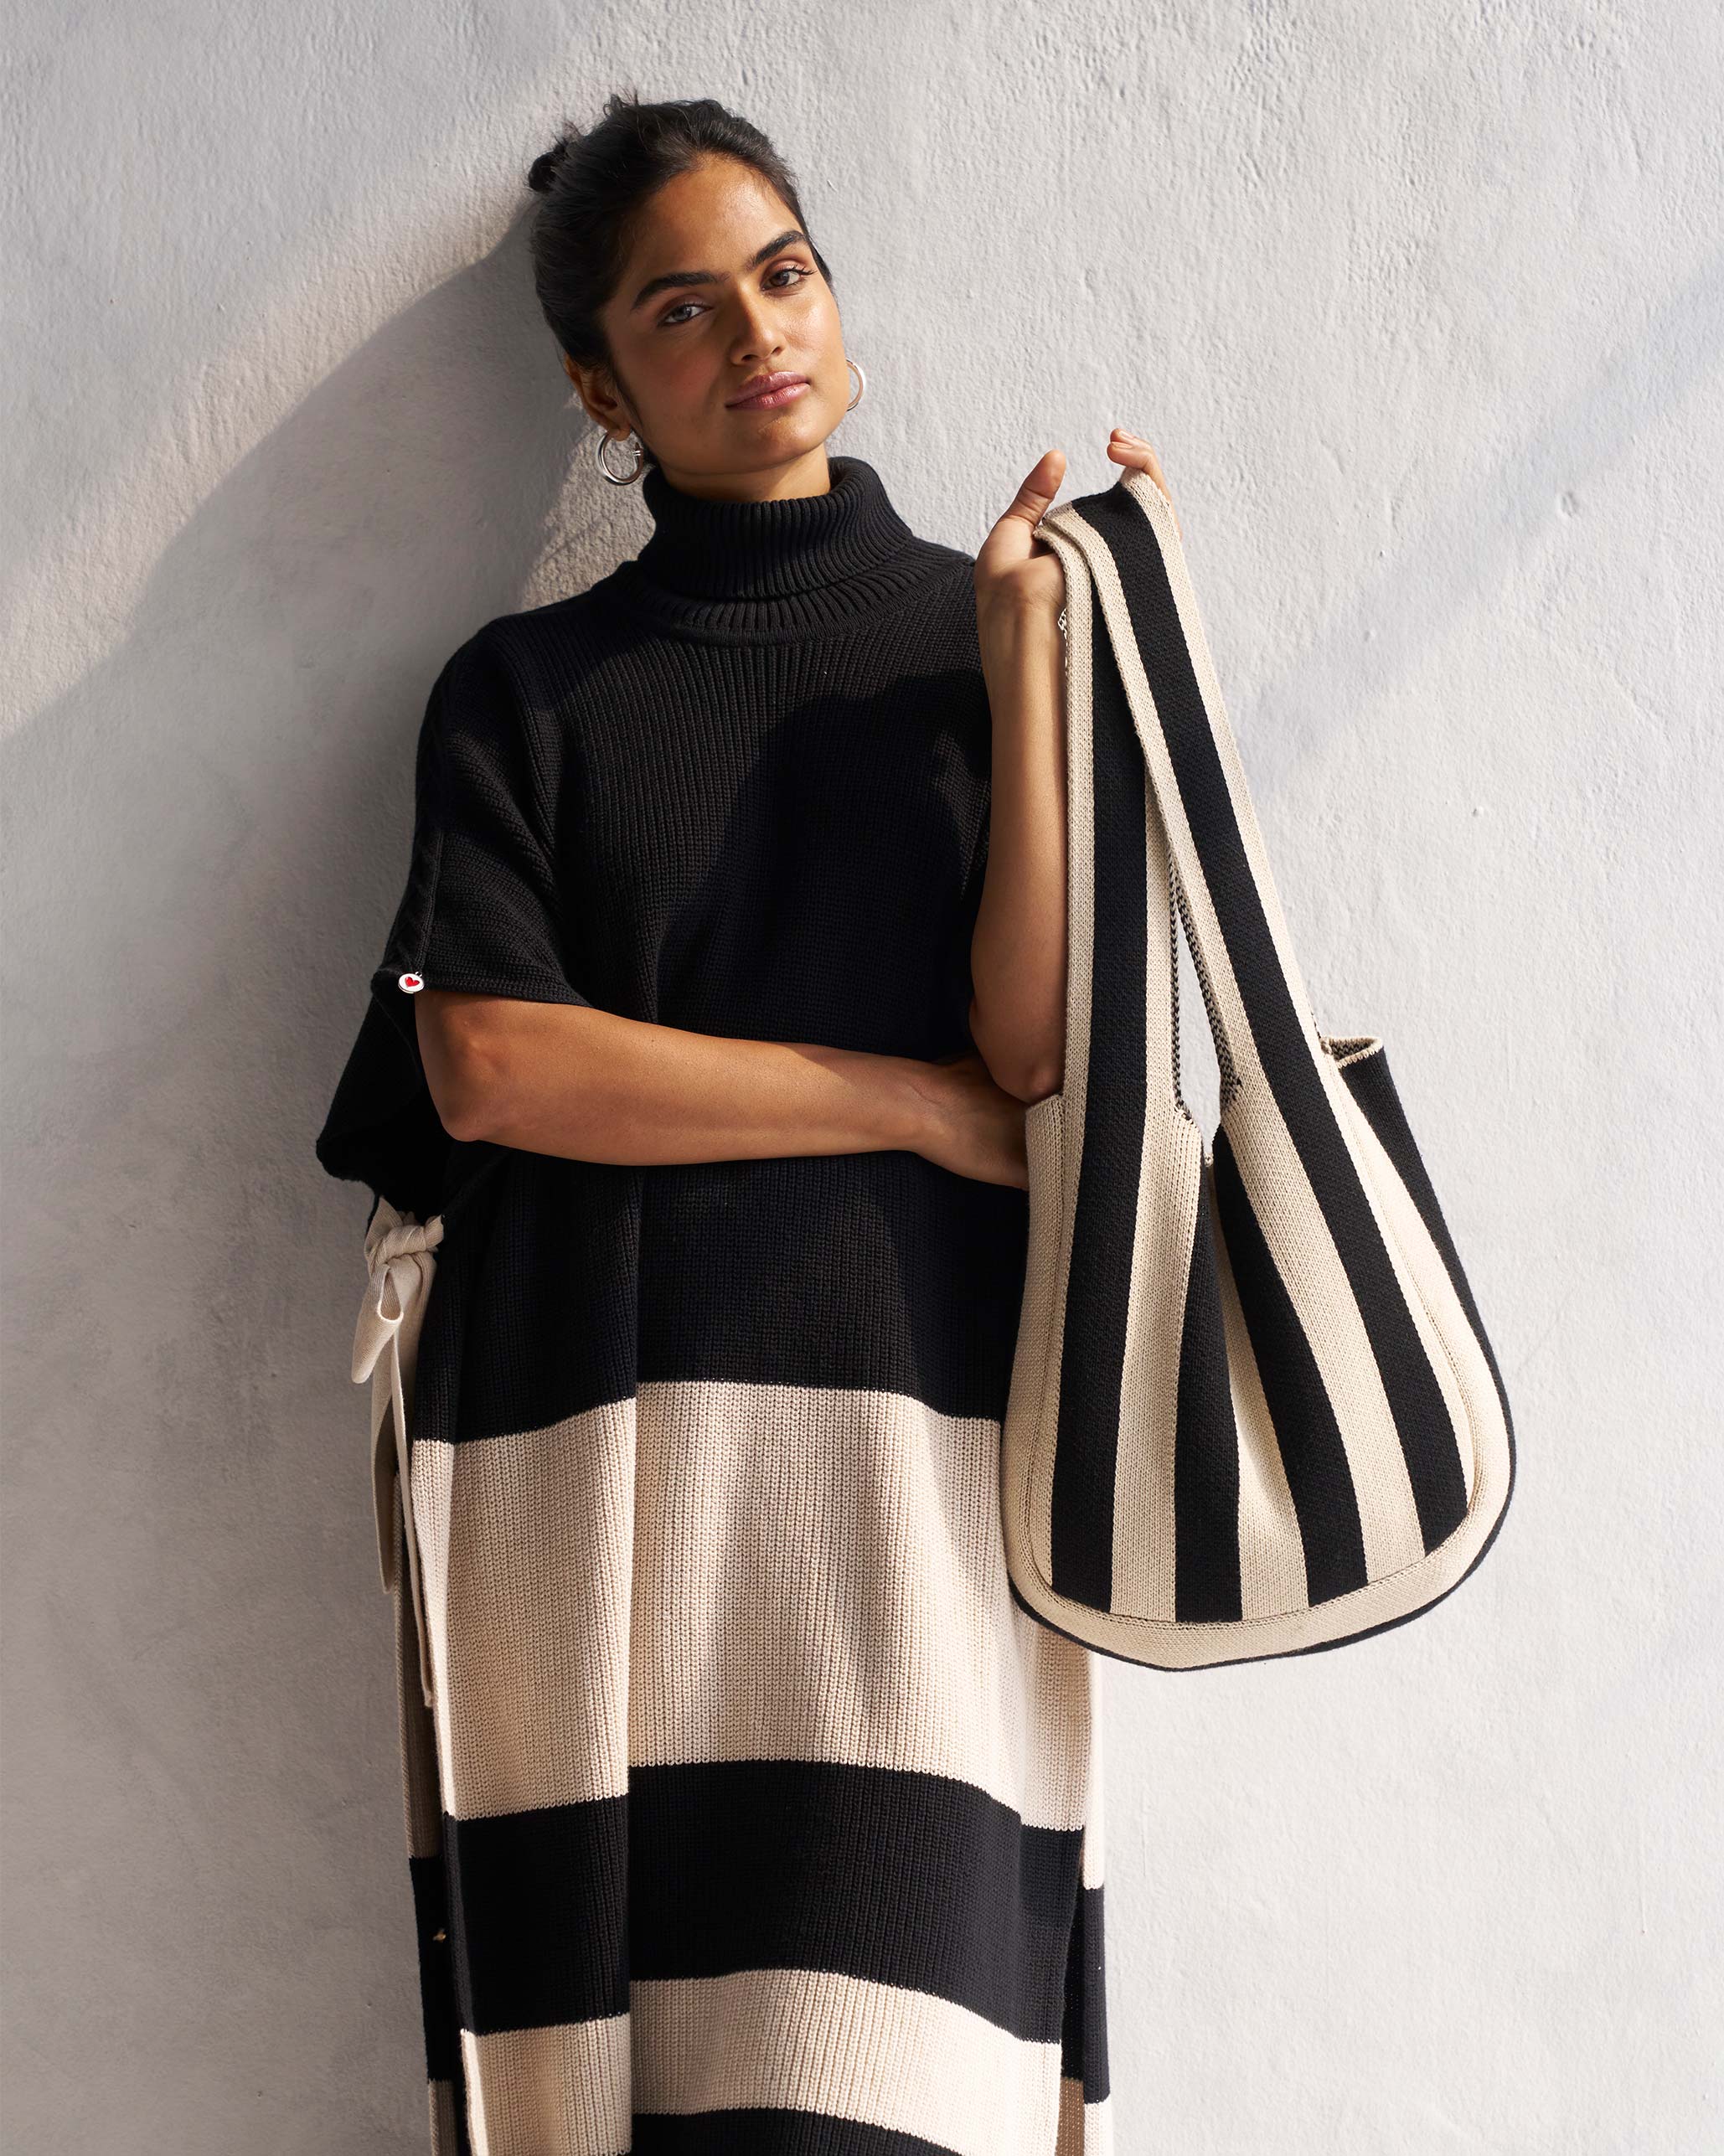 Stripe Bag - Ivory & Black